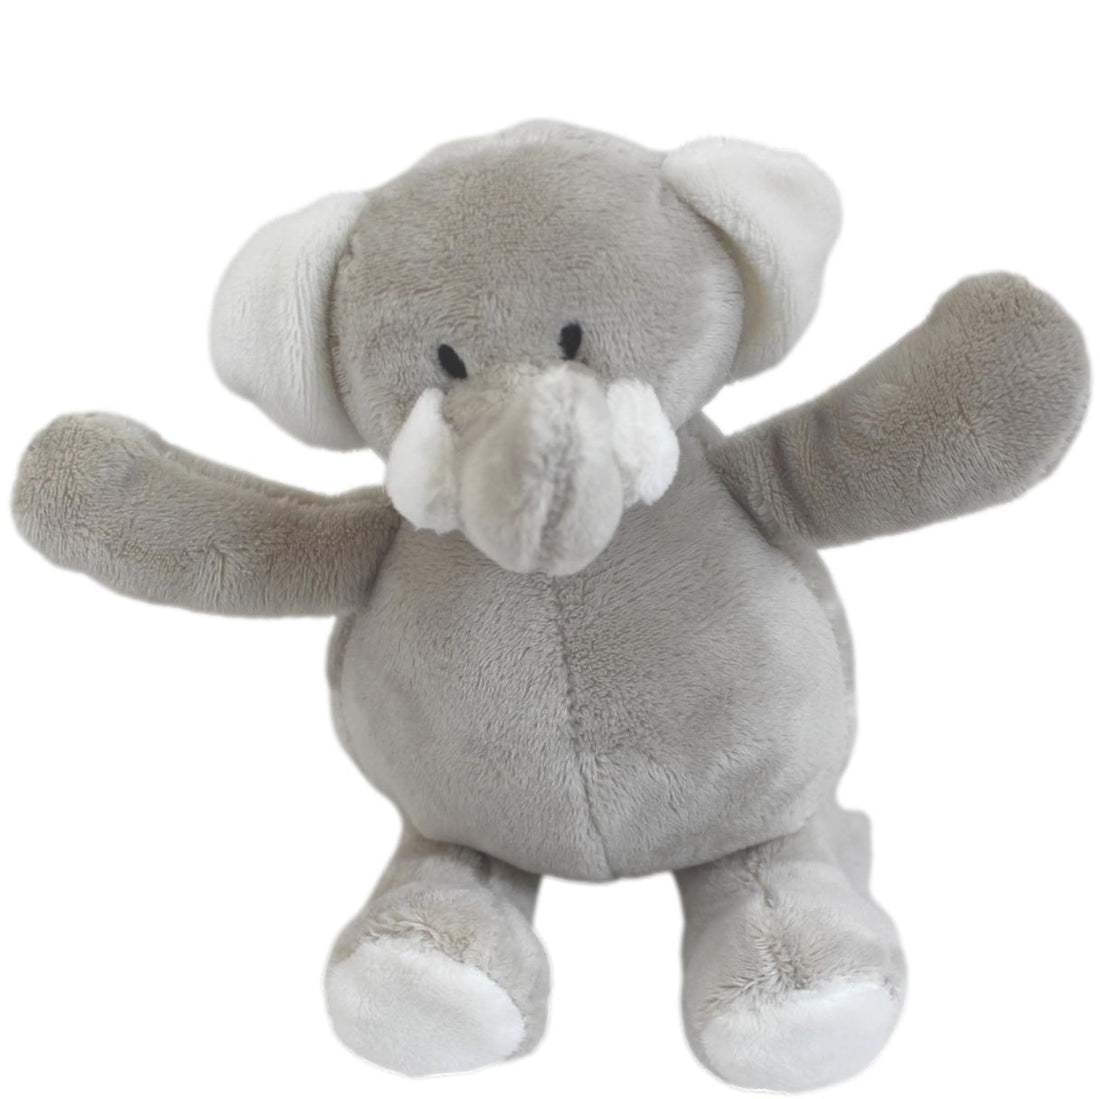 Elli the Elephant Teddy